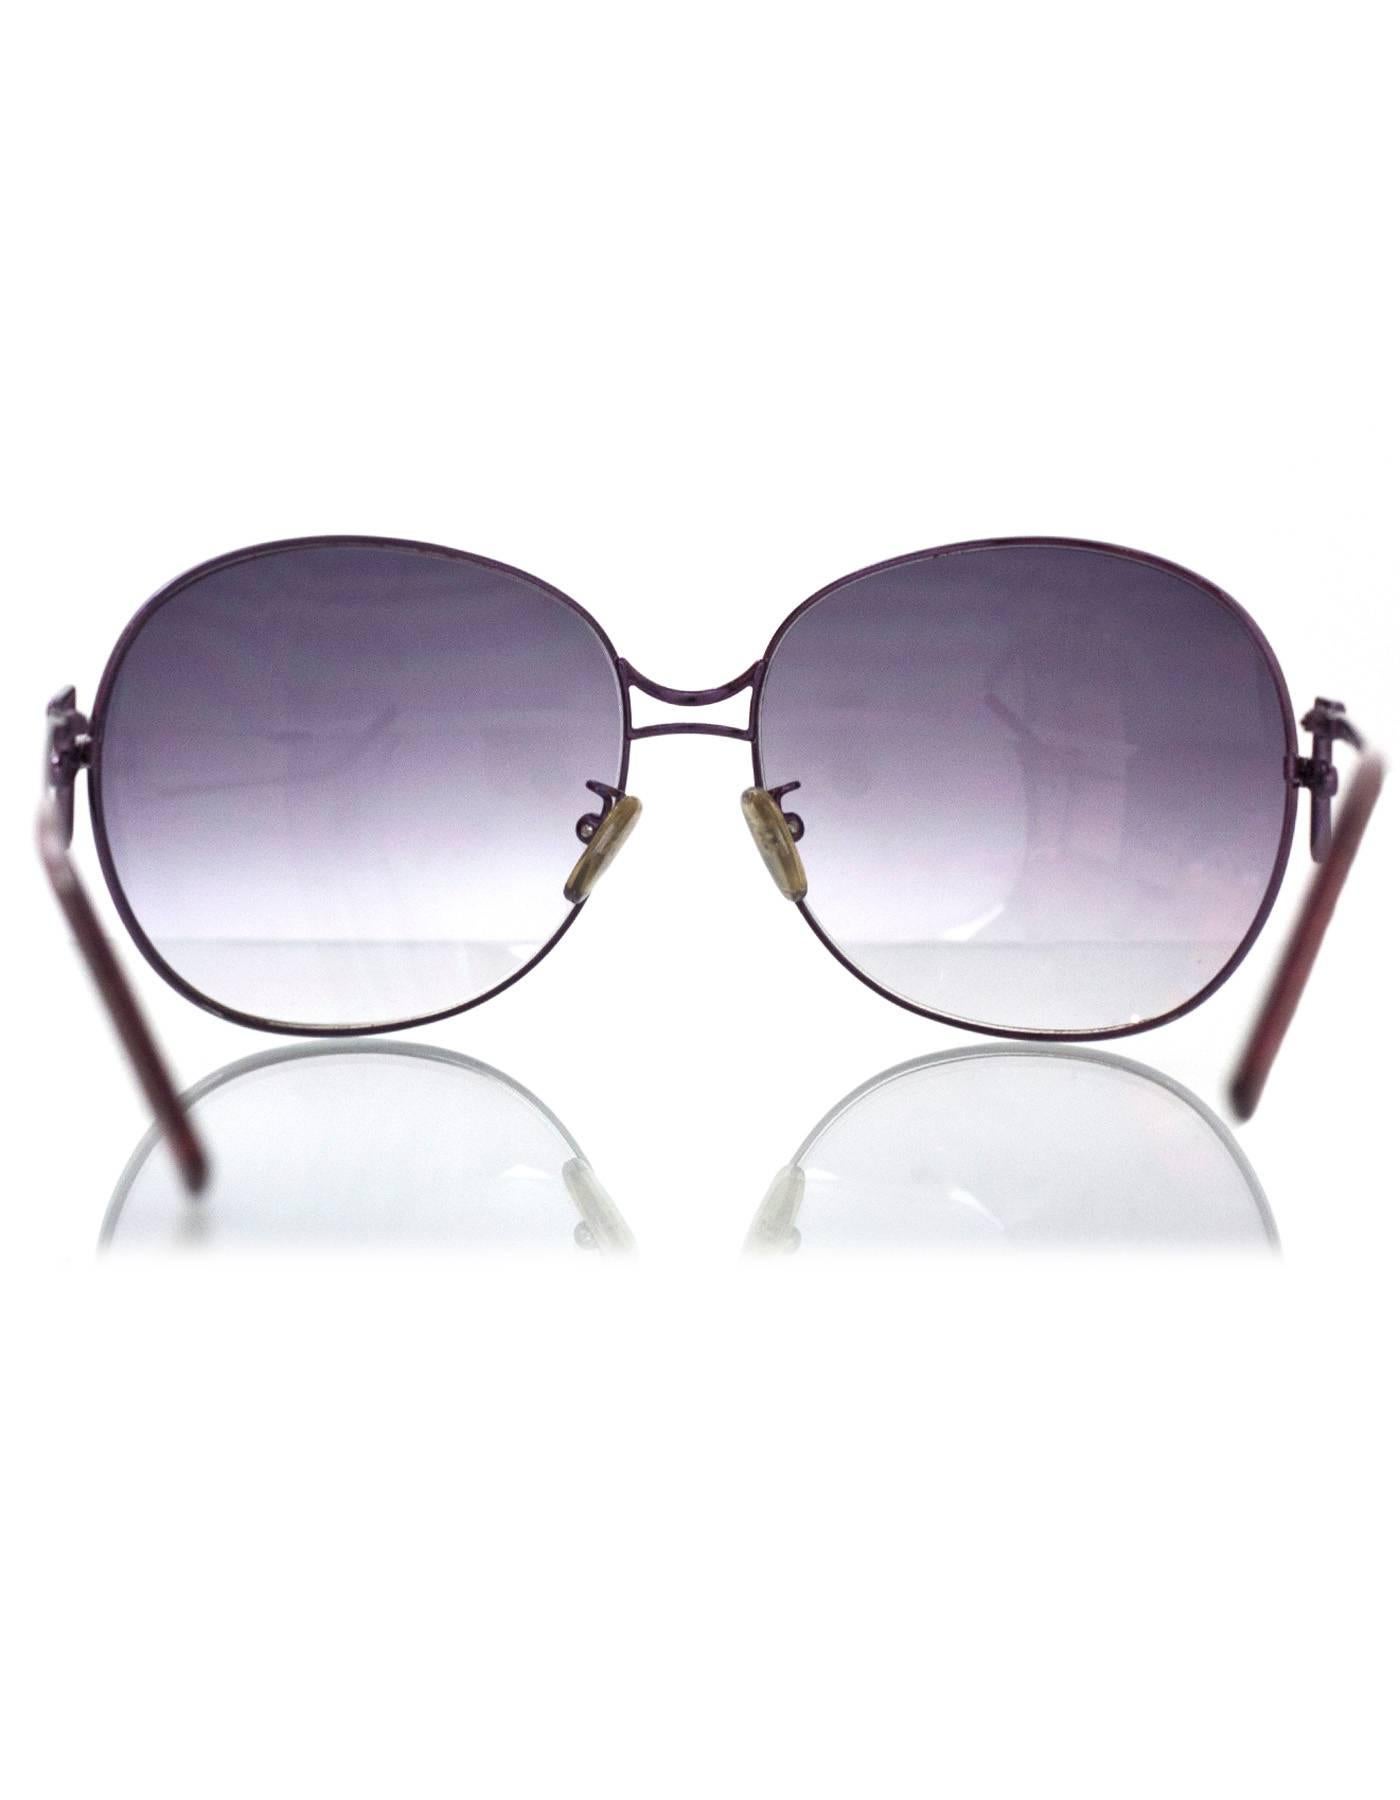 Fendi Purple Round Sunglasses with Case 1